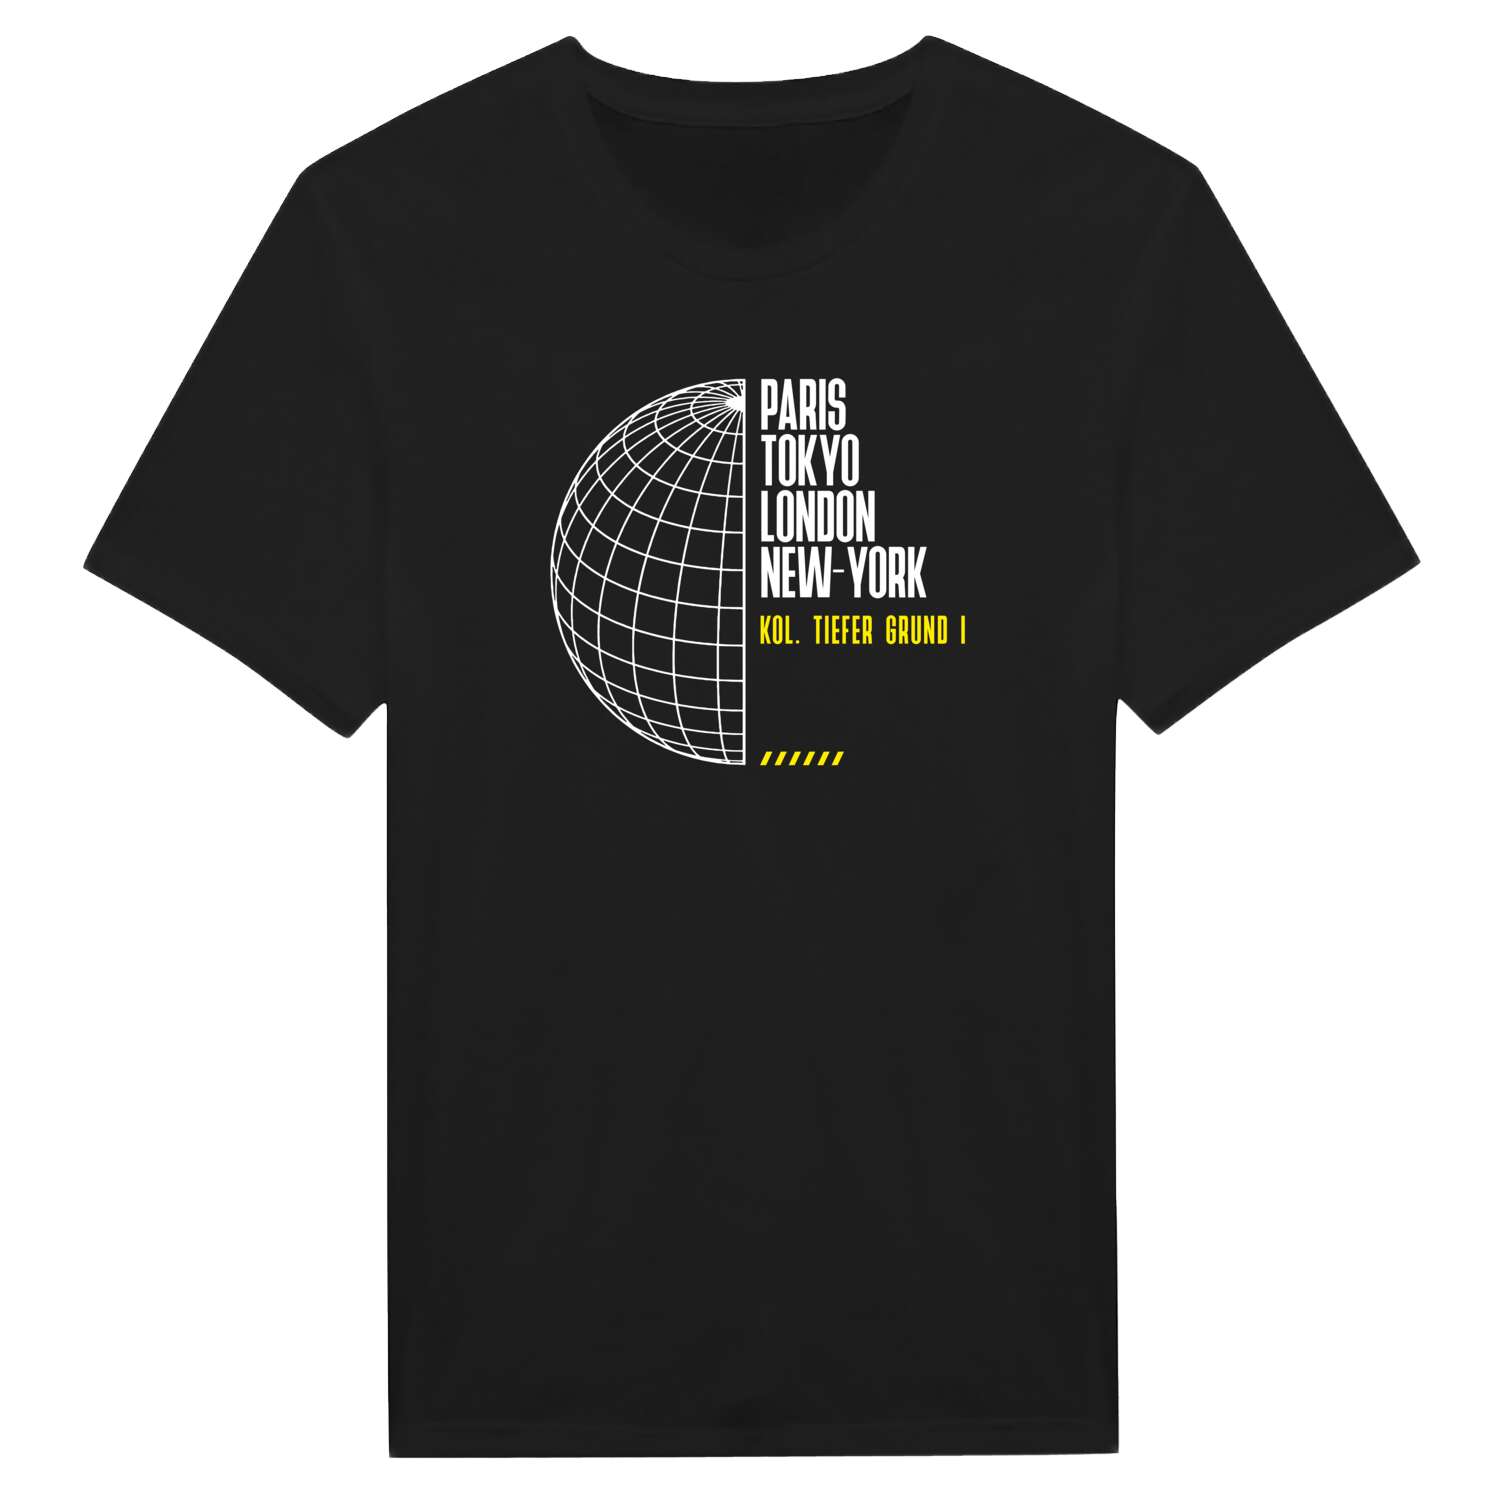 Kol. Tiefer Grund I T-Shirt »Paris Tokyo London«